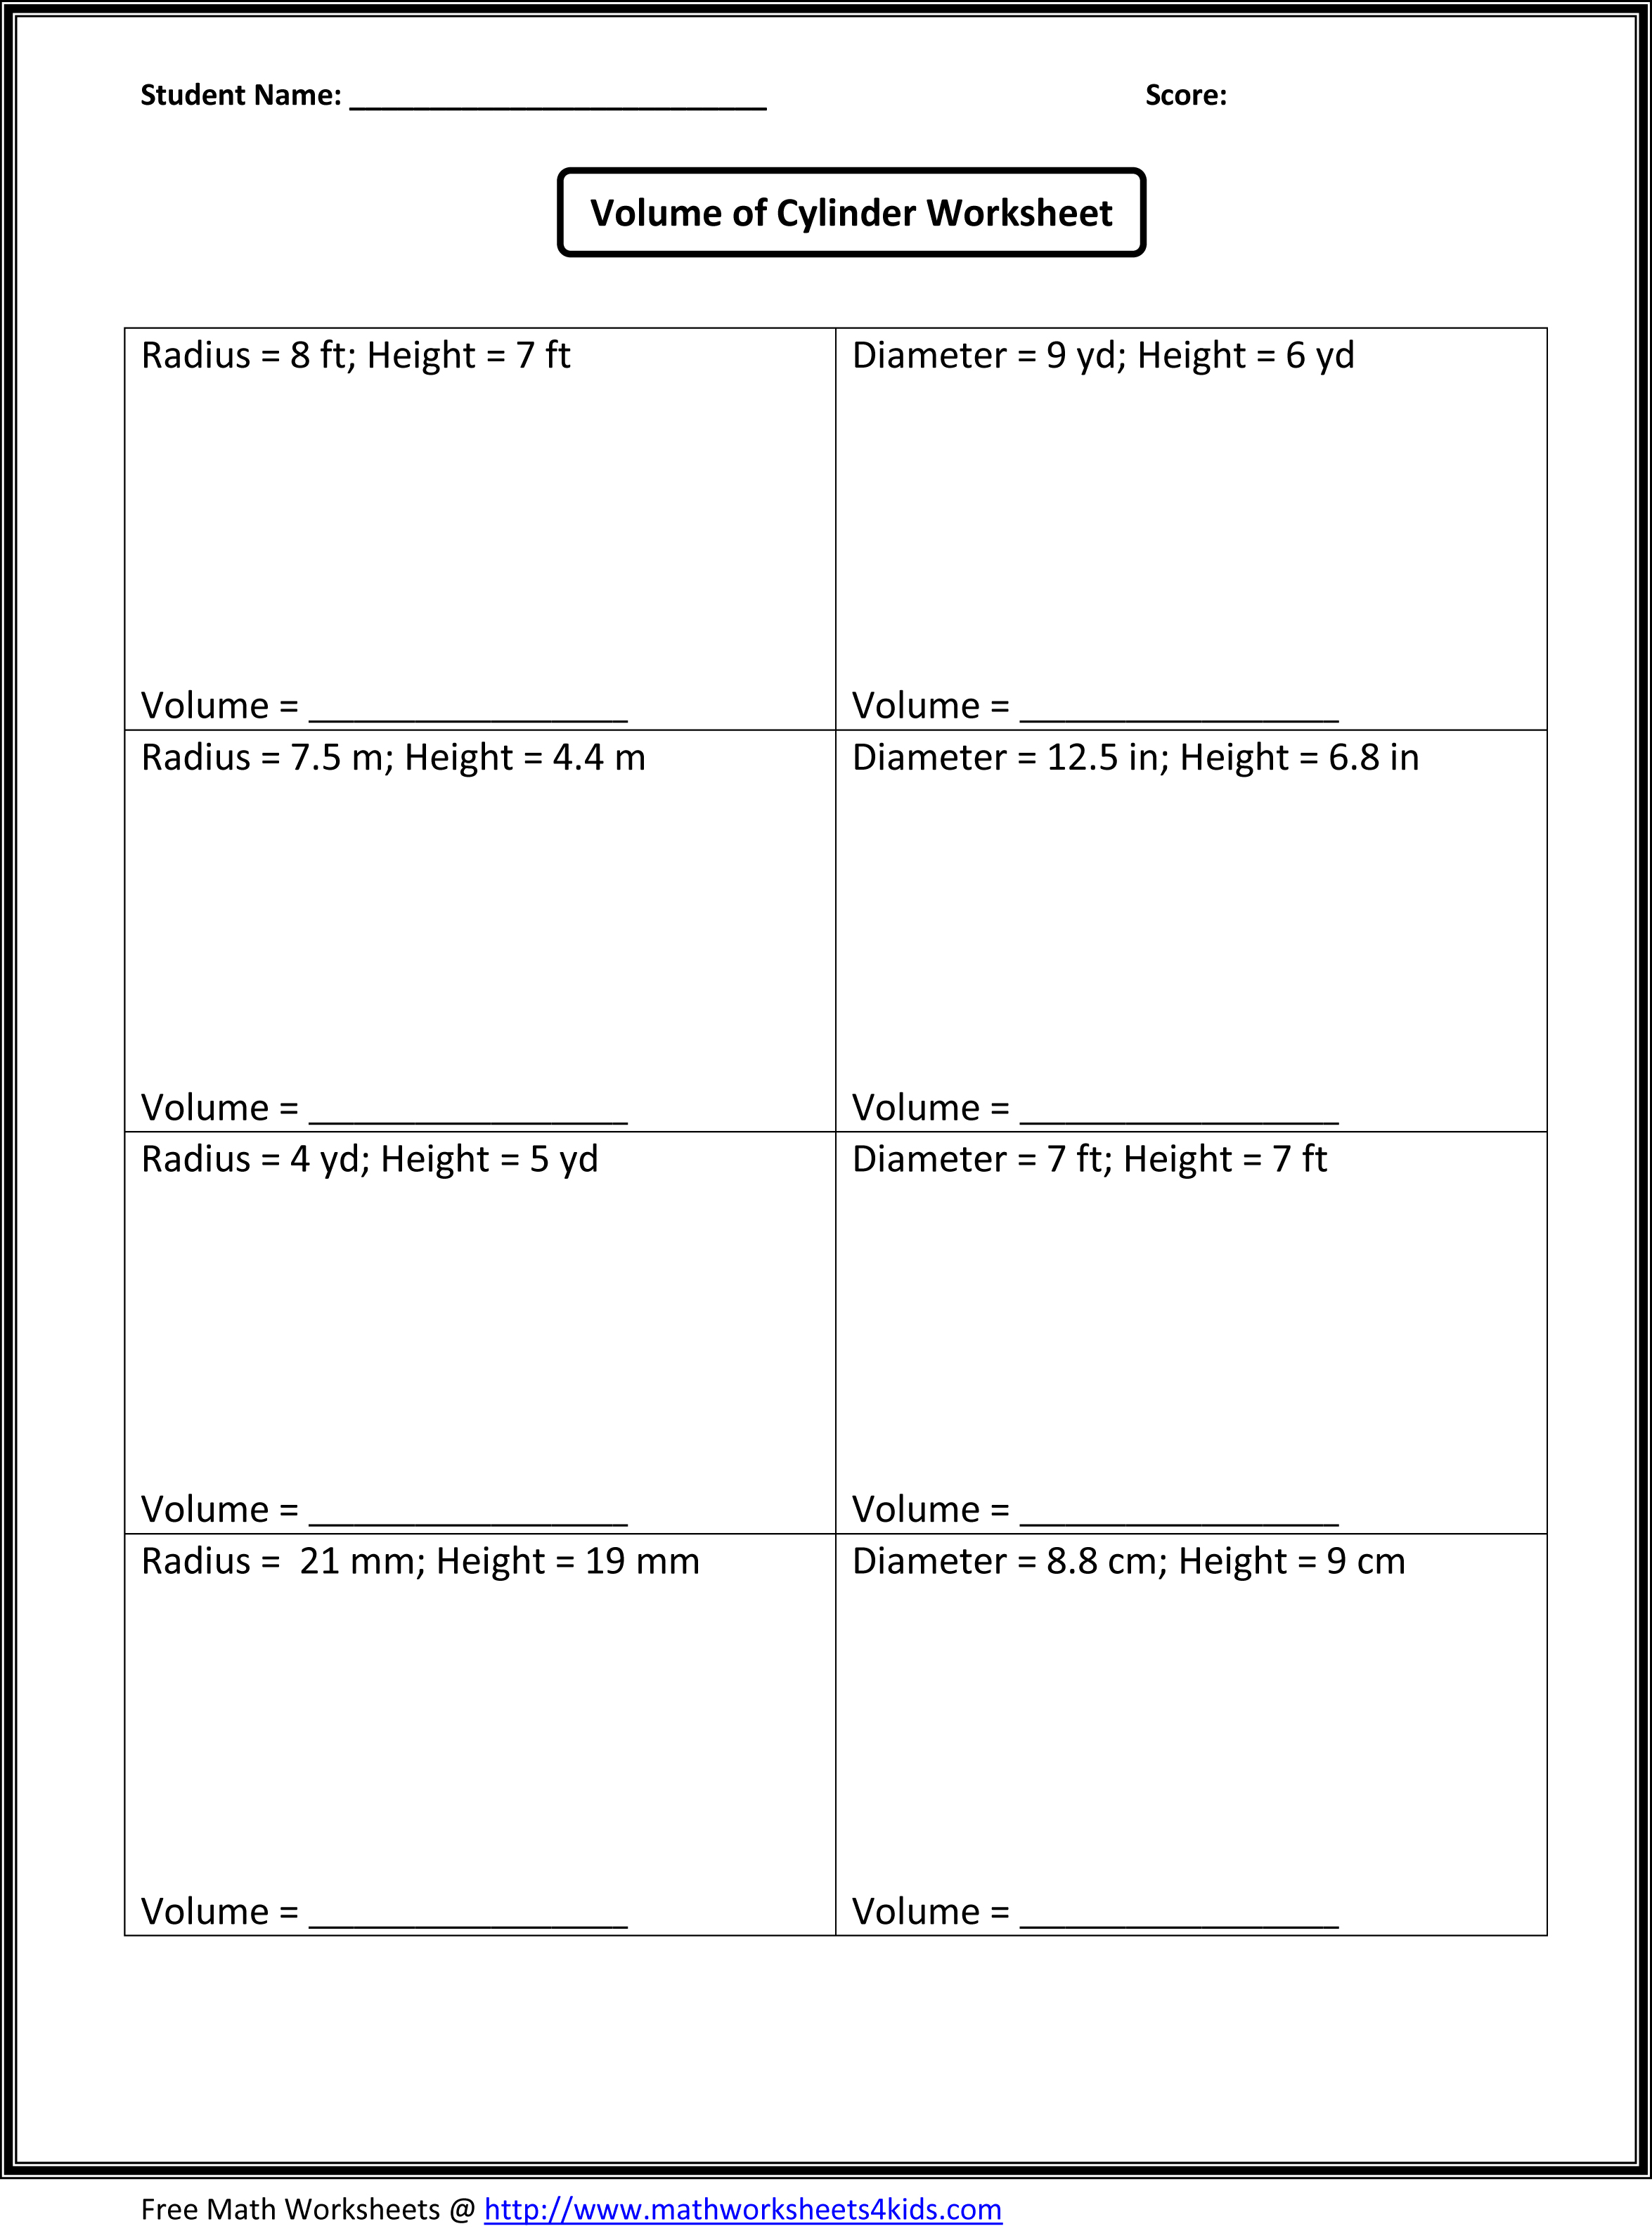 7th Grade Math Volume Worksheets Image